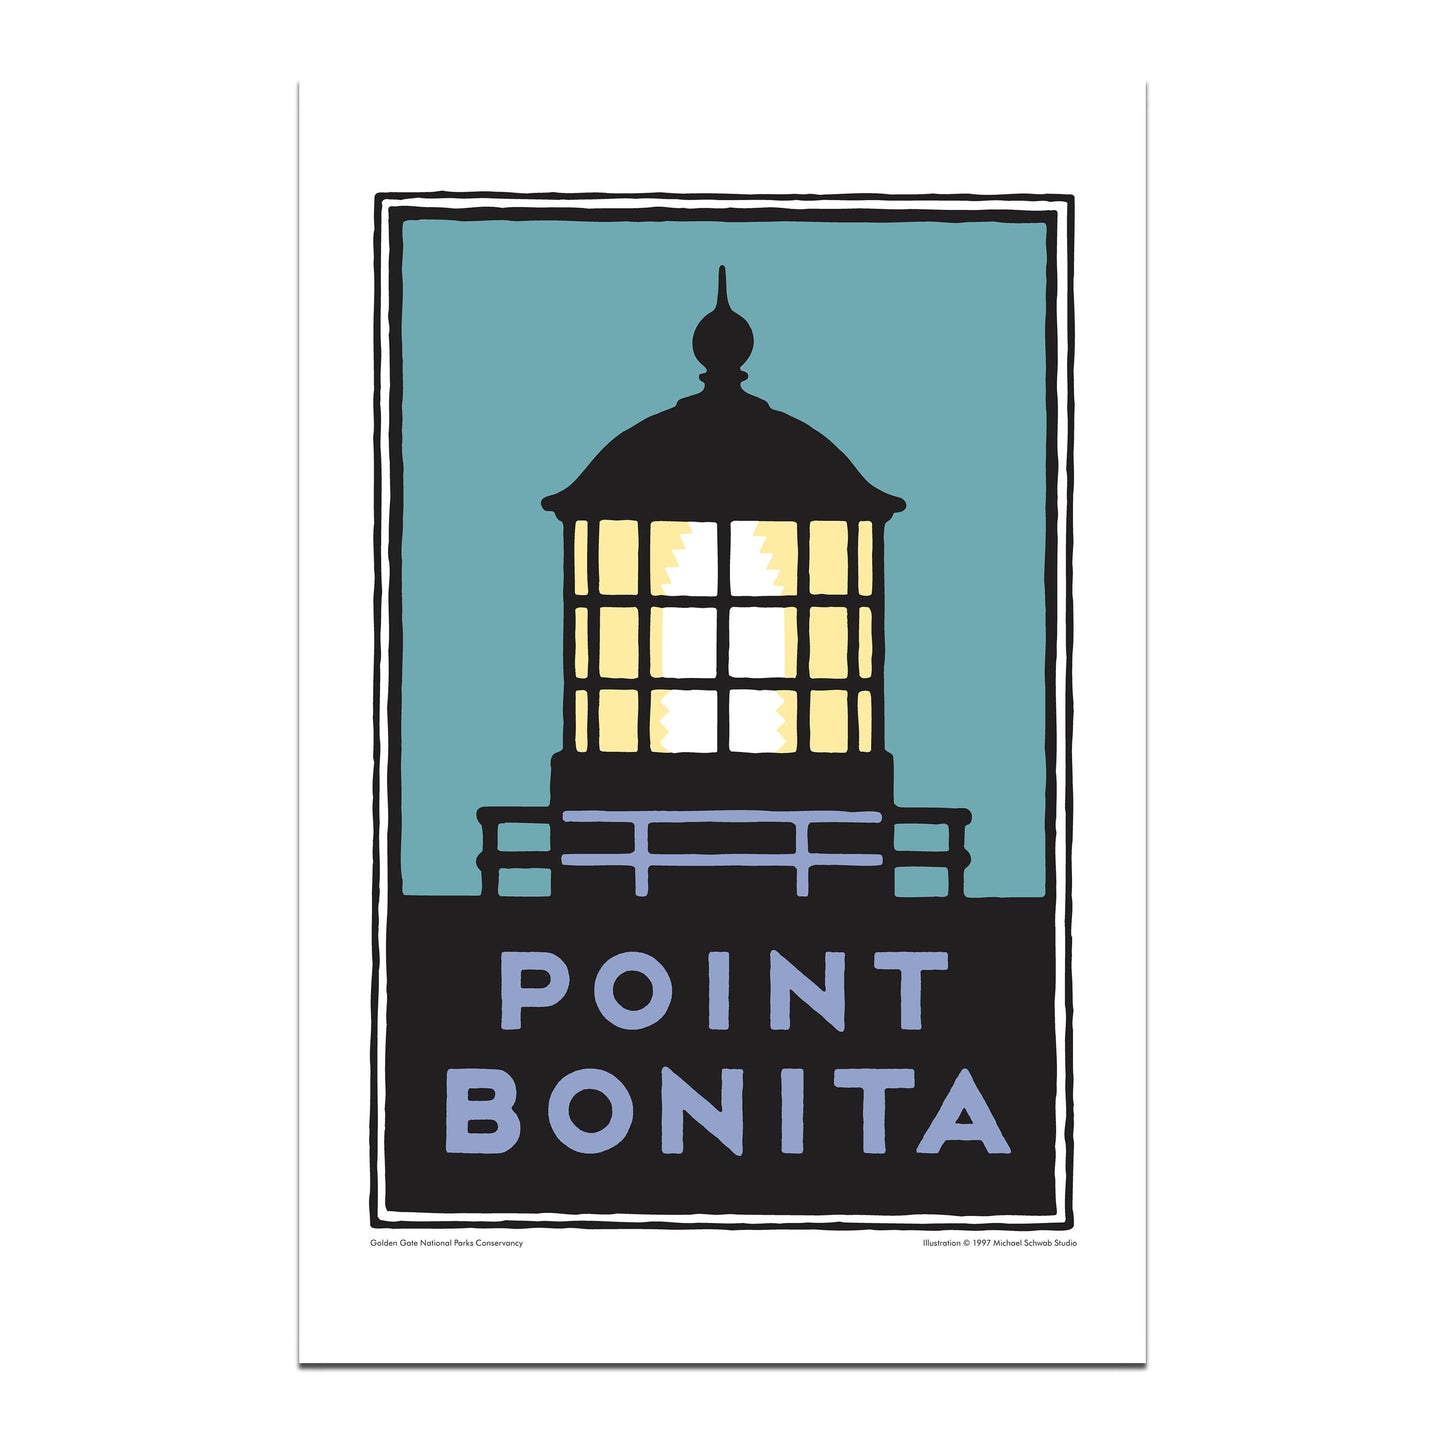 Unframed 11 x 17 inch Point Bonita lighthouse art print, illustration by Michael Schwab.